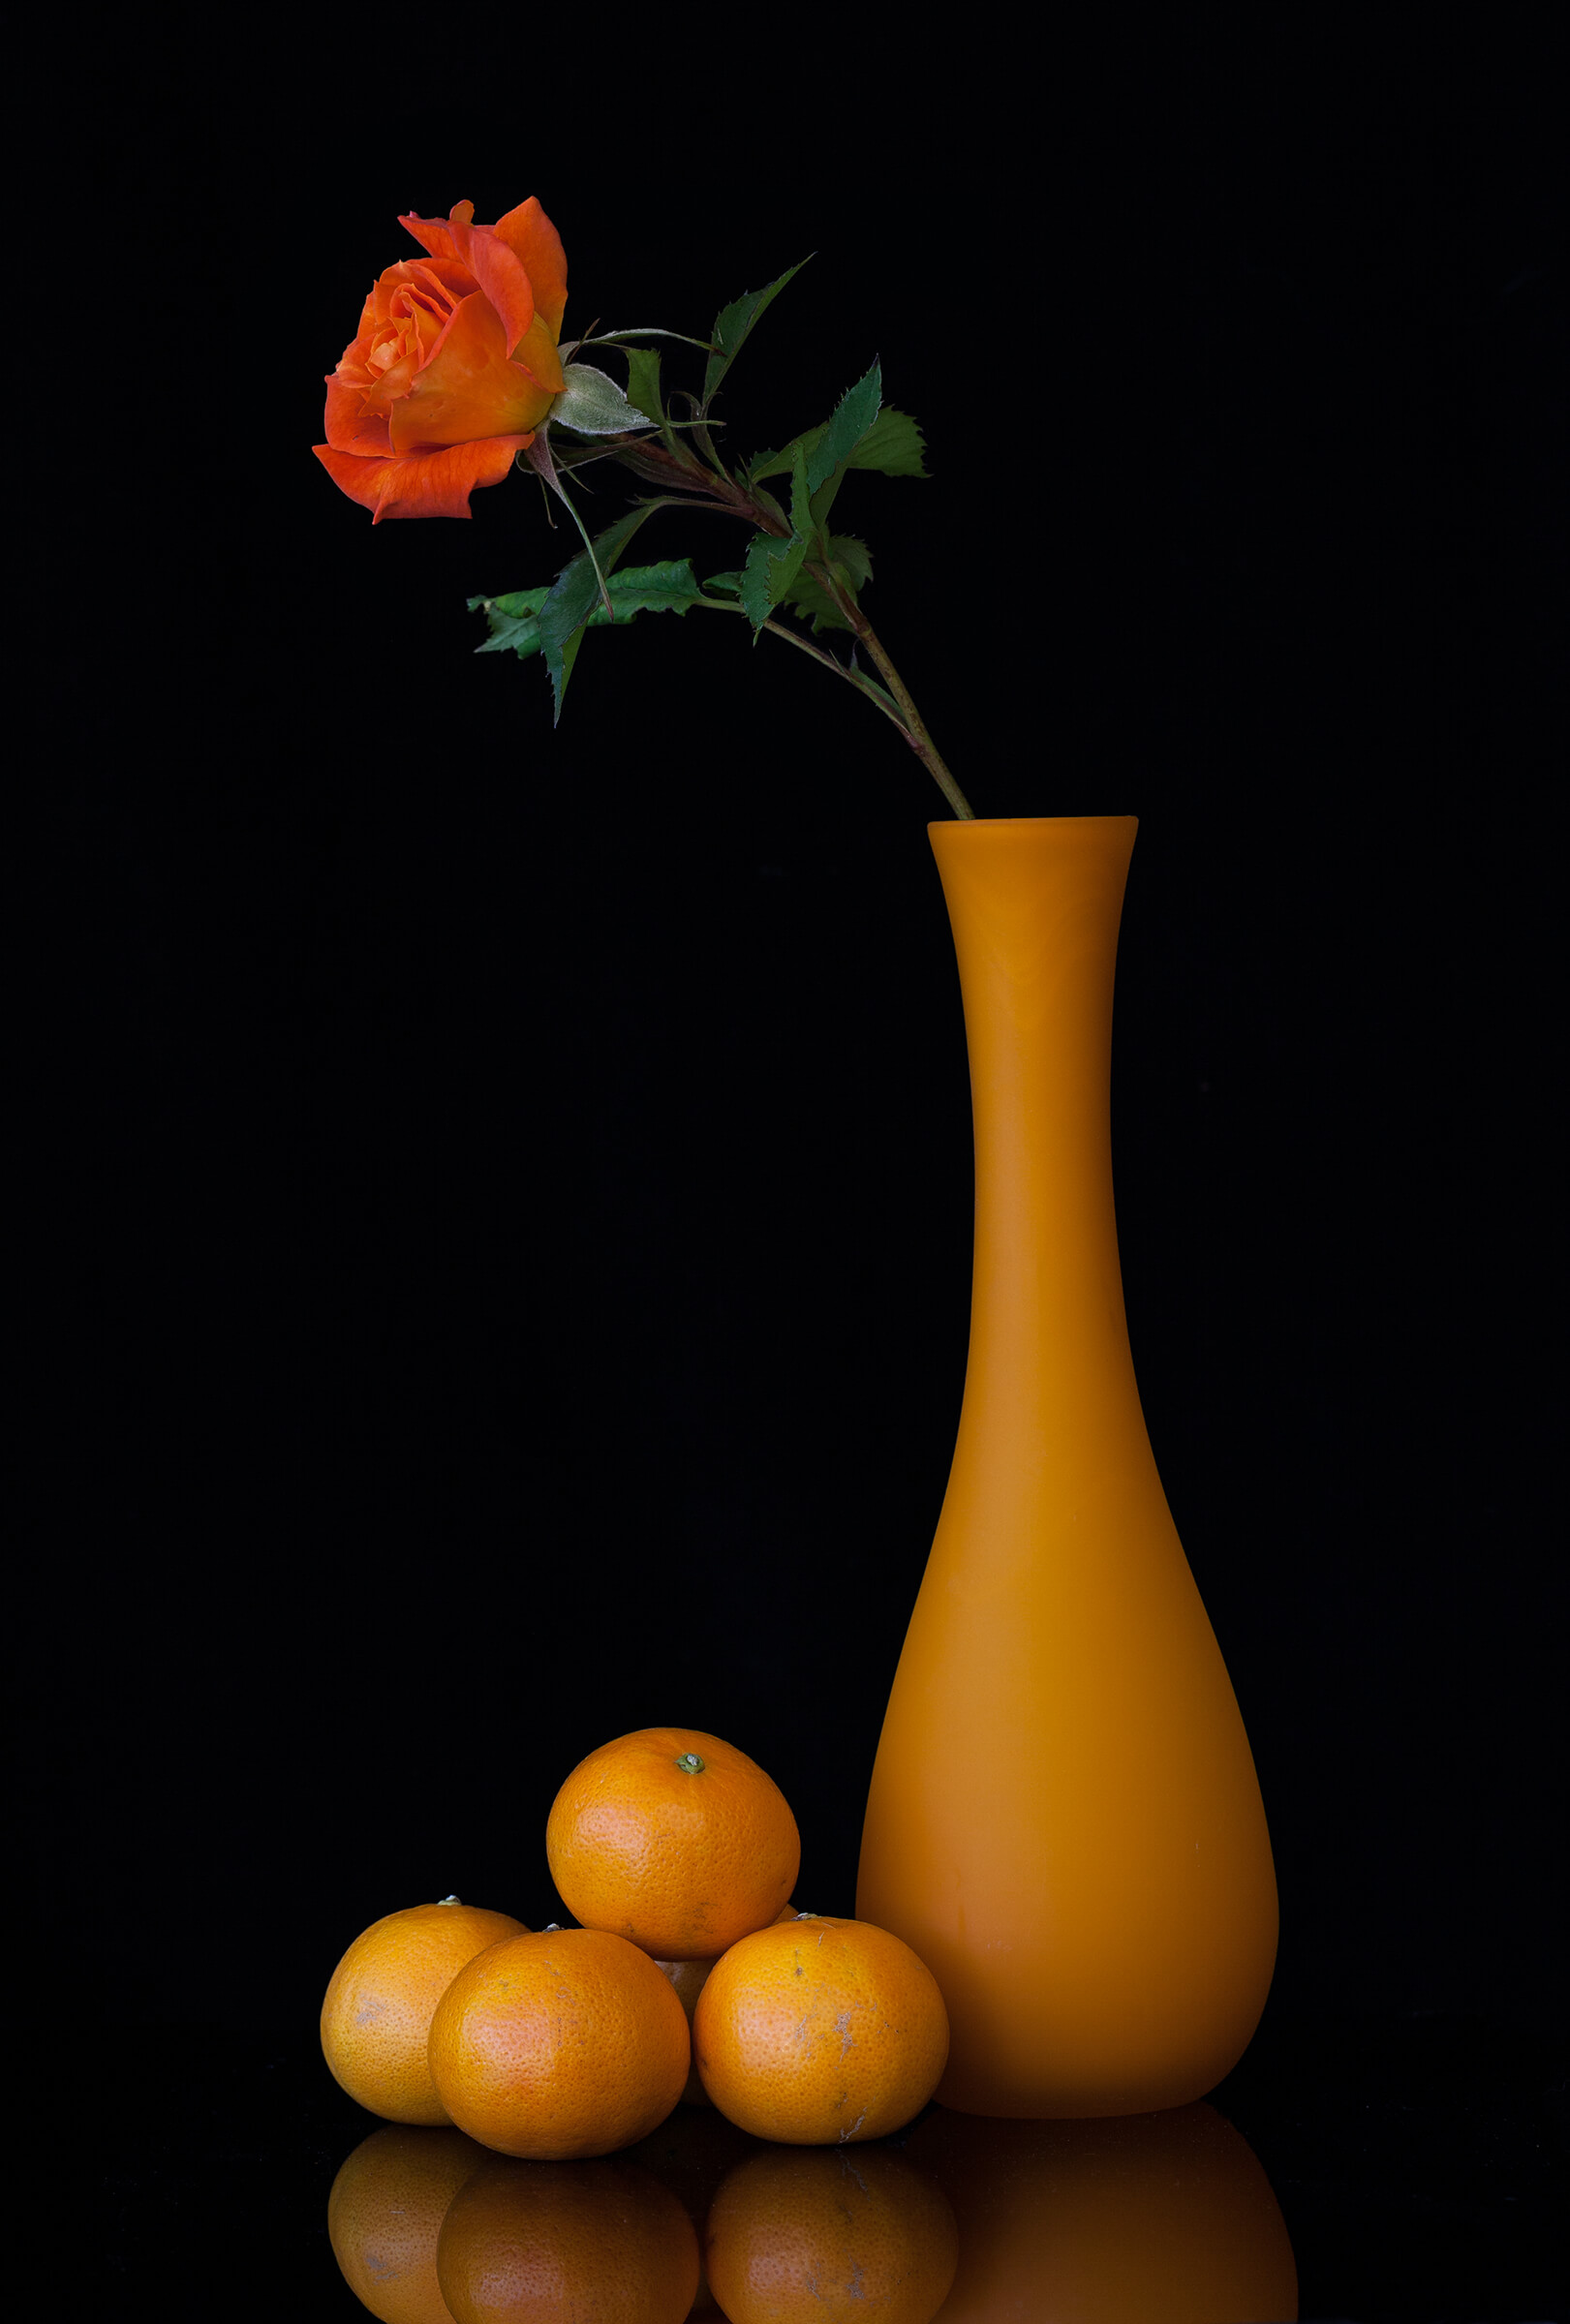 Orange Super trouper rose in an orange vase with tangerines